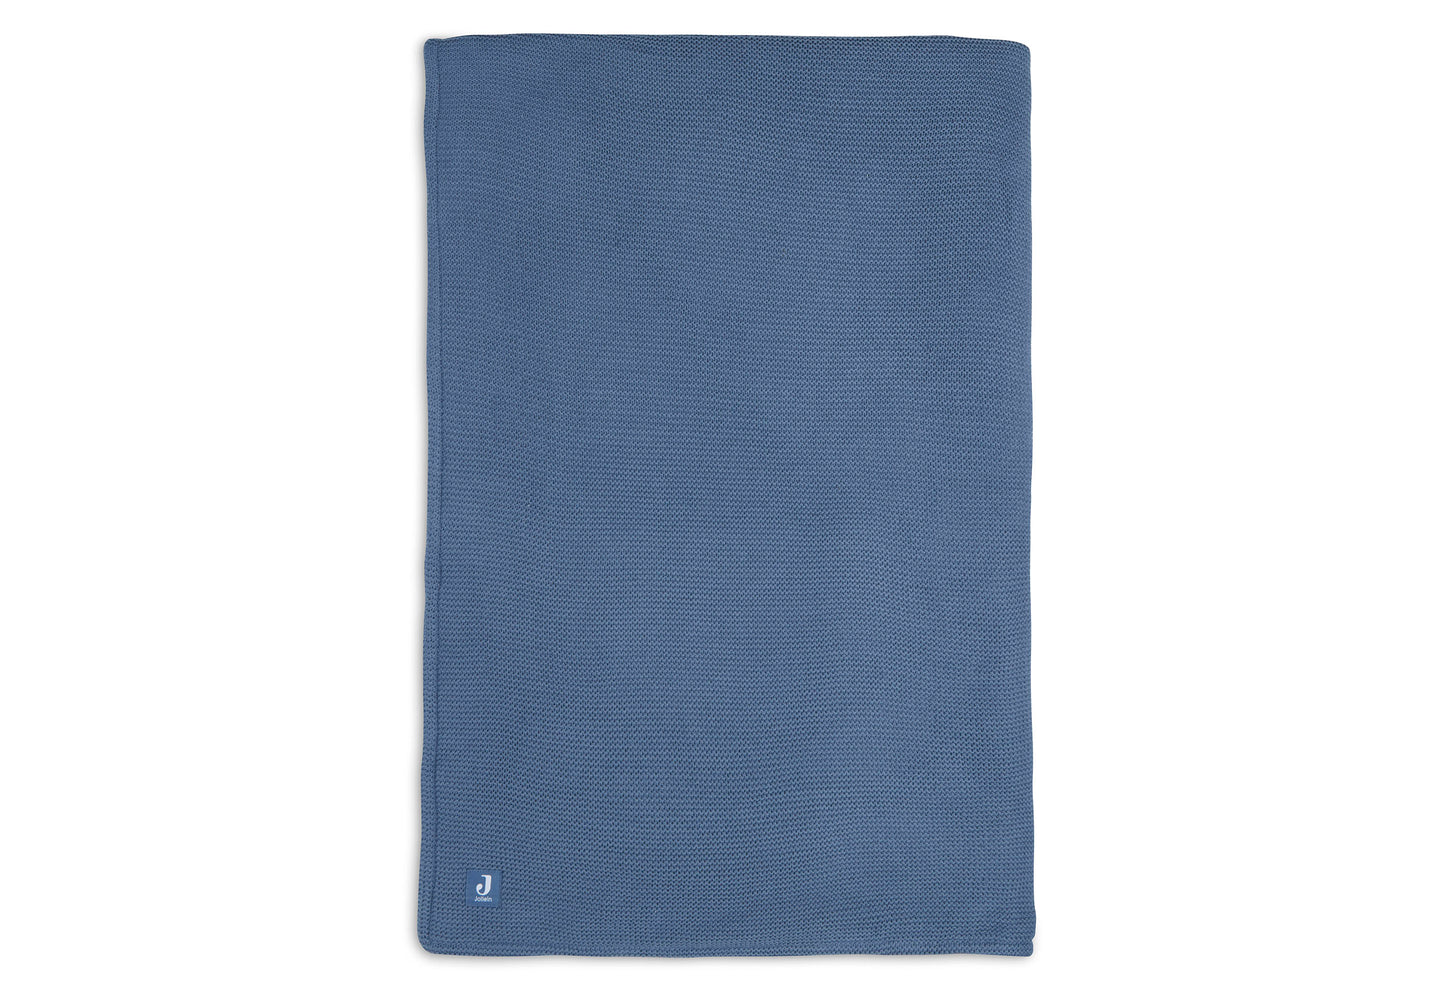 Jollein Deken Ledikant 100x150cm Basic Knit Jeans Blue/Fleece